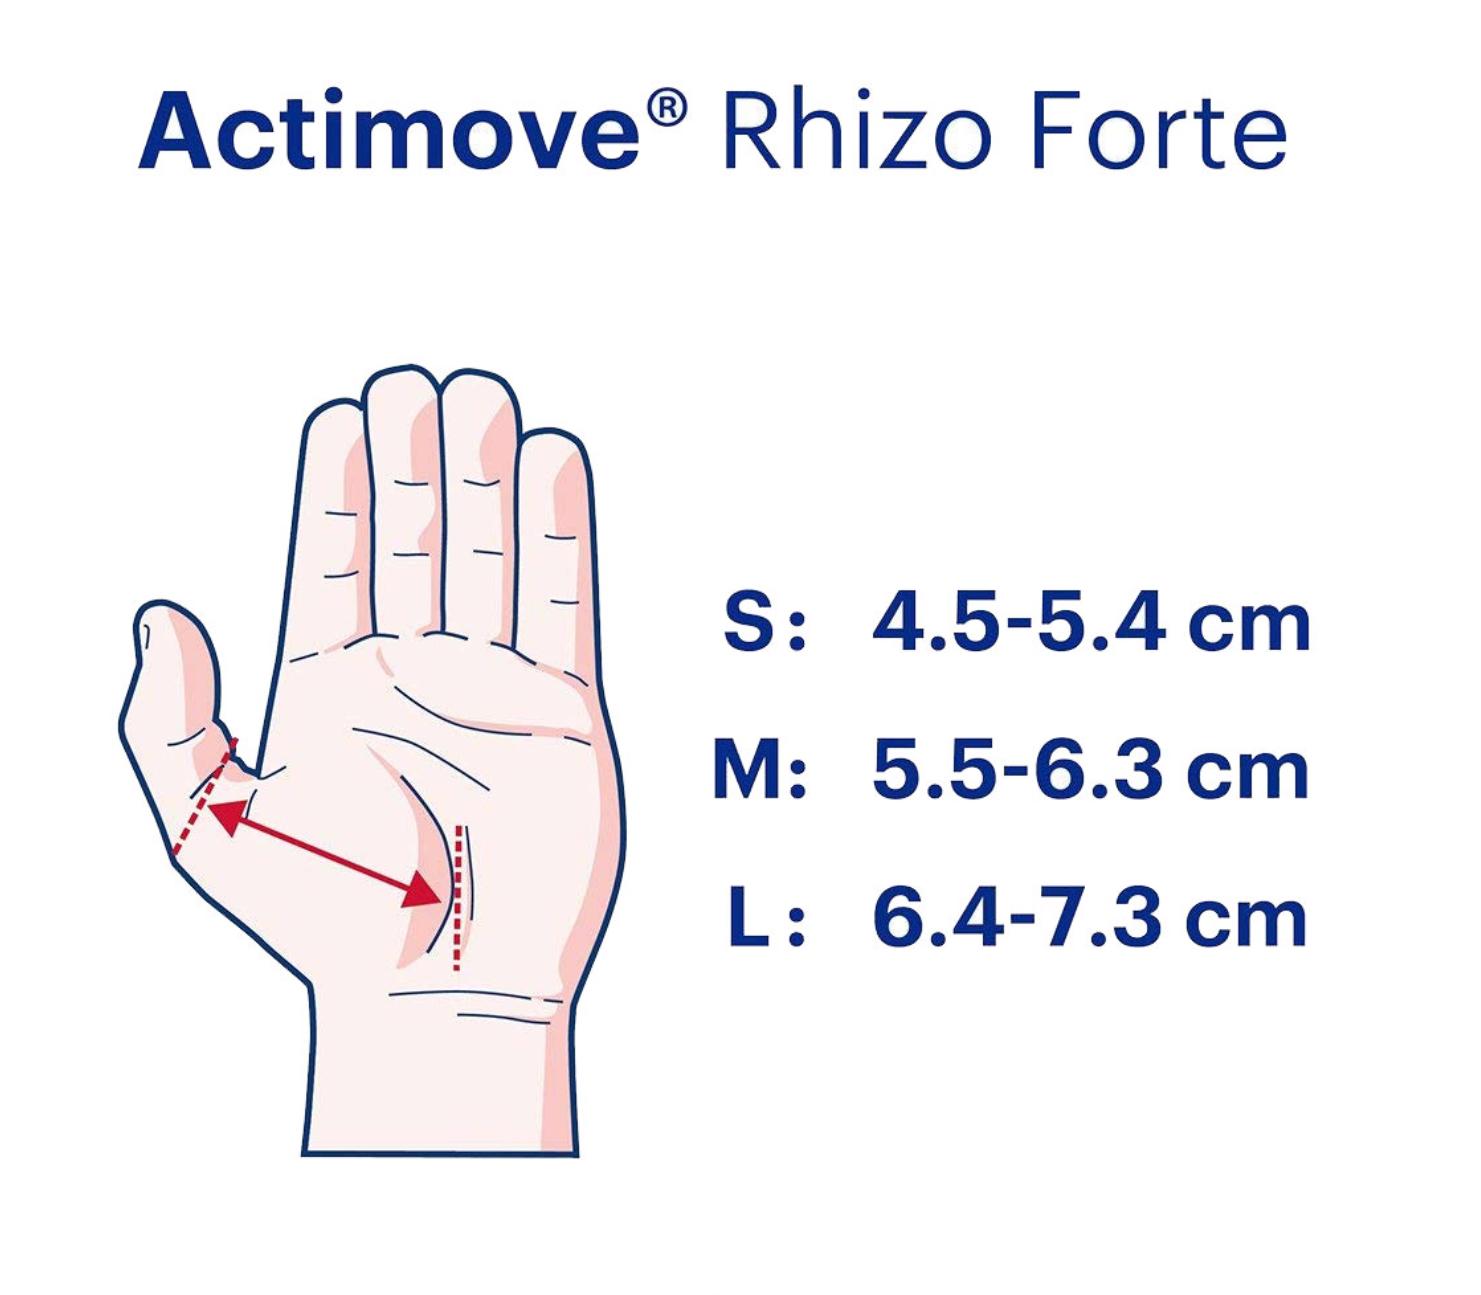 ACTIMOVE RHIZO FORTE S SX